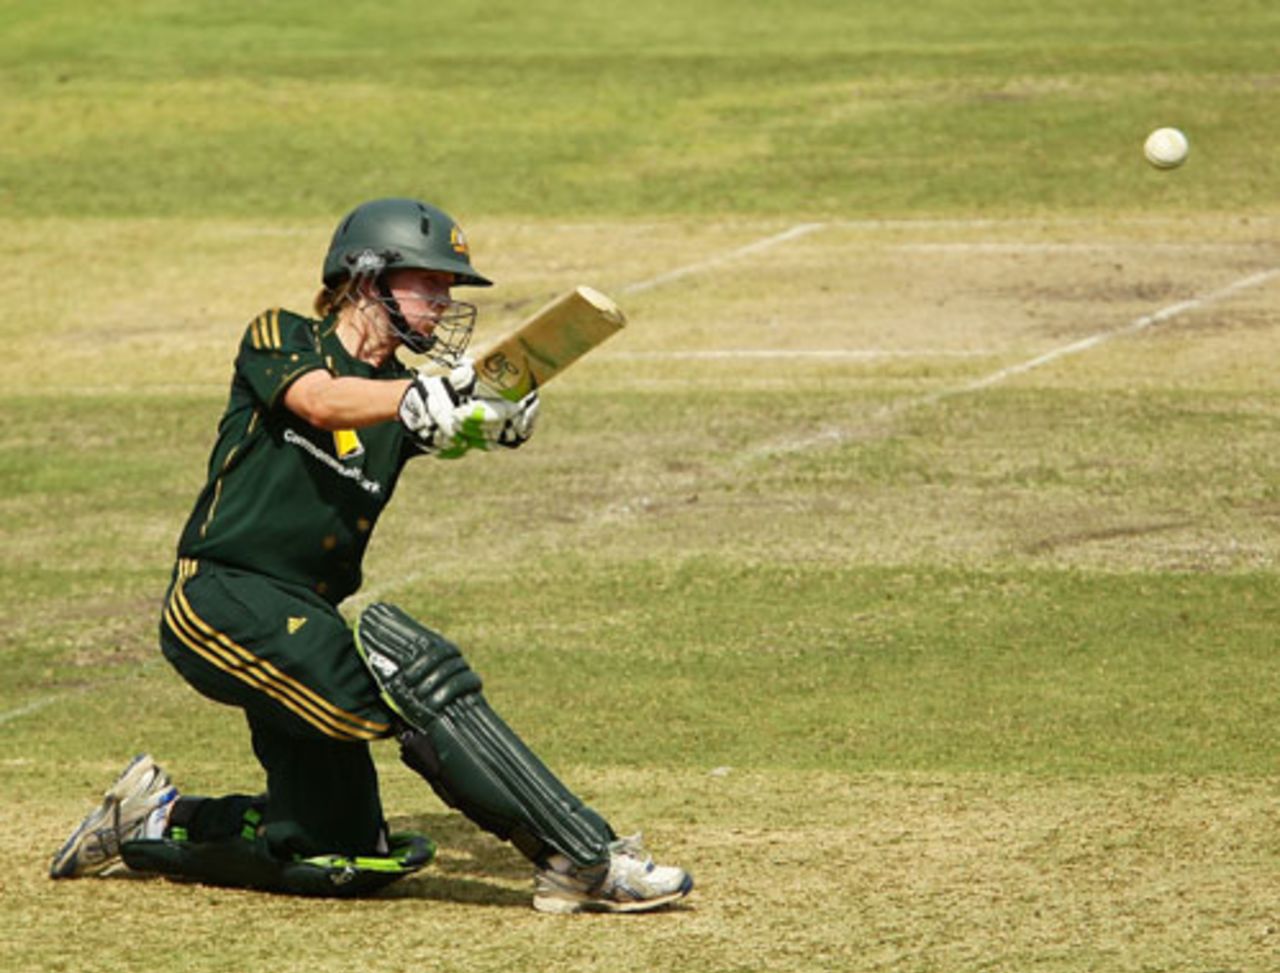 Rachael Haynes top scored with 56, Australia v New Zealand, 1st ODI, Rose Bowl Series, Adelaide, 10 February, 2010